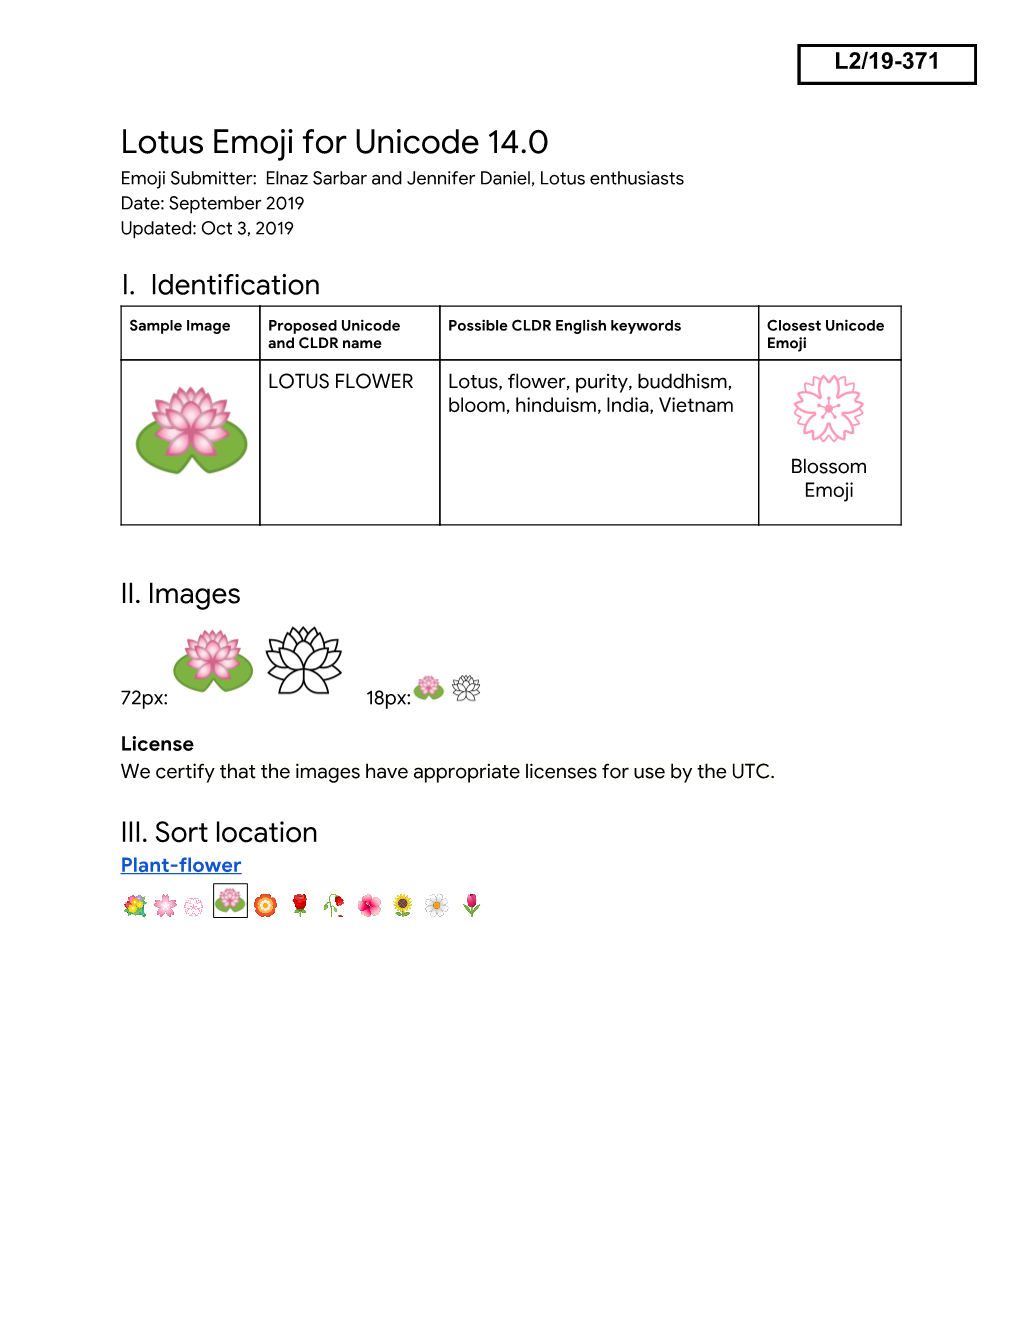 Lotus Emoji for Unicode 14.0 Emoji Submitter: Elnaz Sarbar and Jennifer Daniel, Lotus Enthusiasts Date: September 2019 Updated: Oct 3, 2019